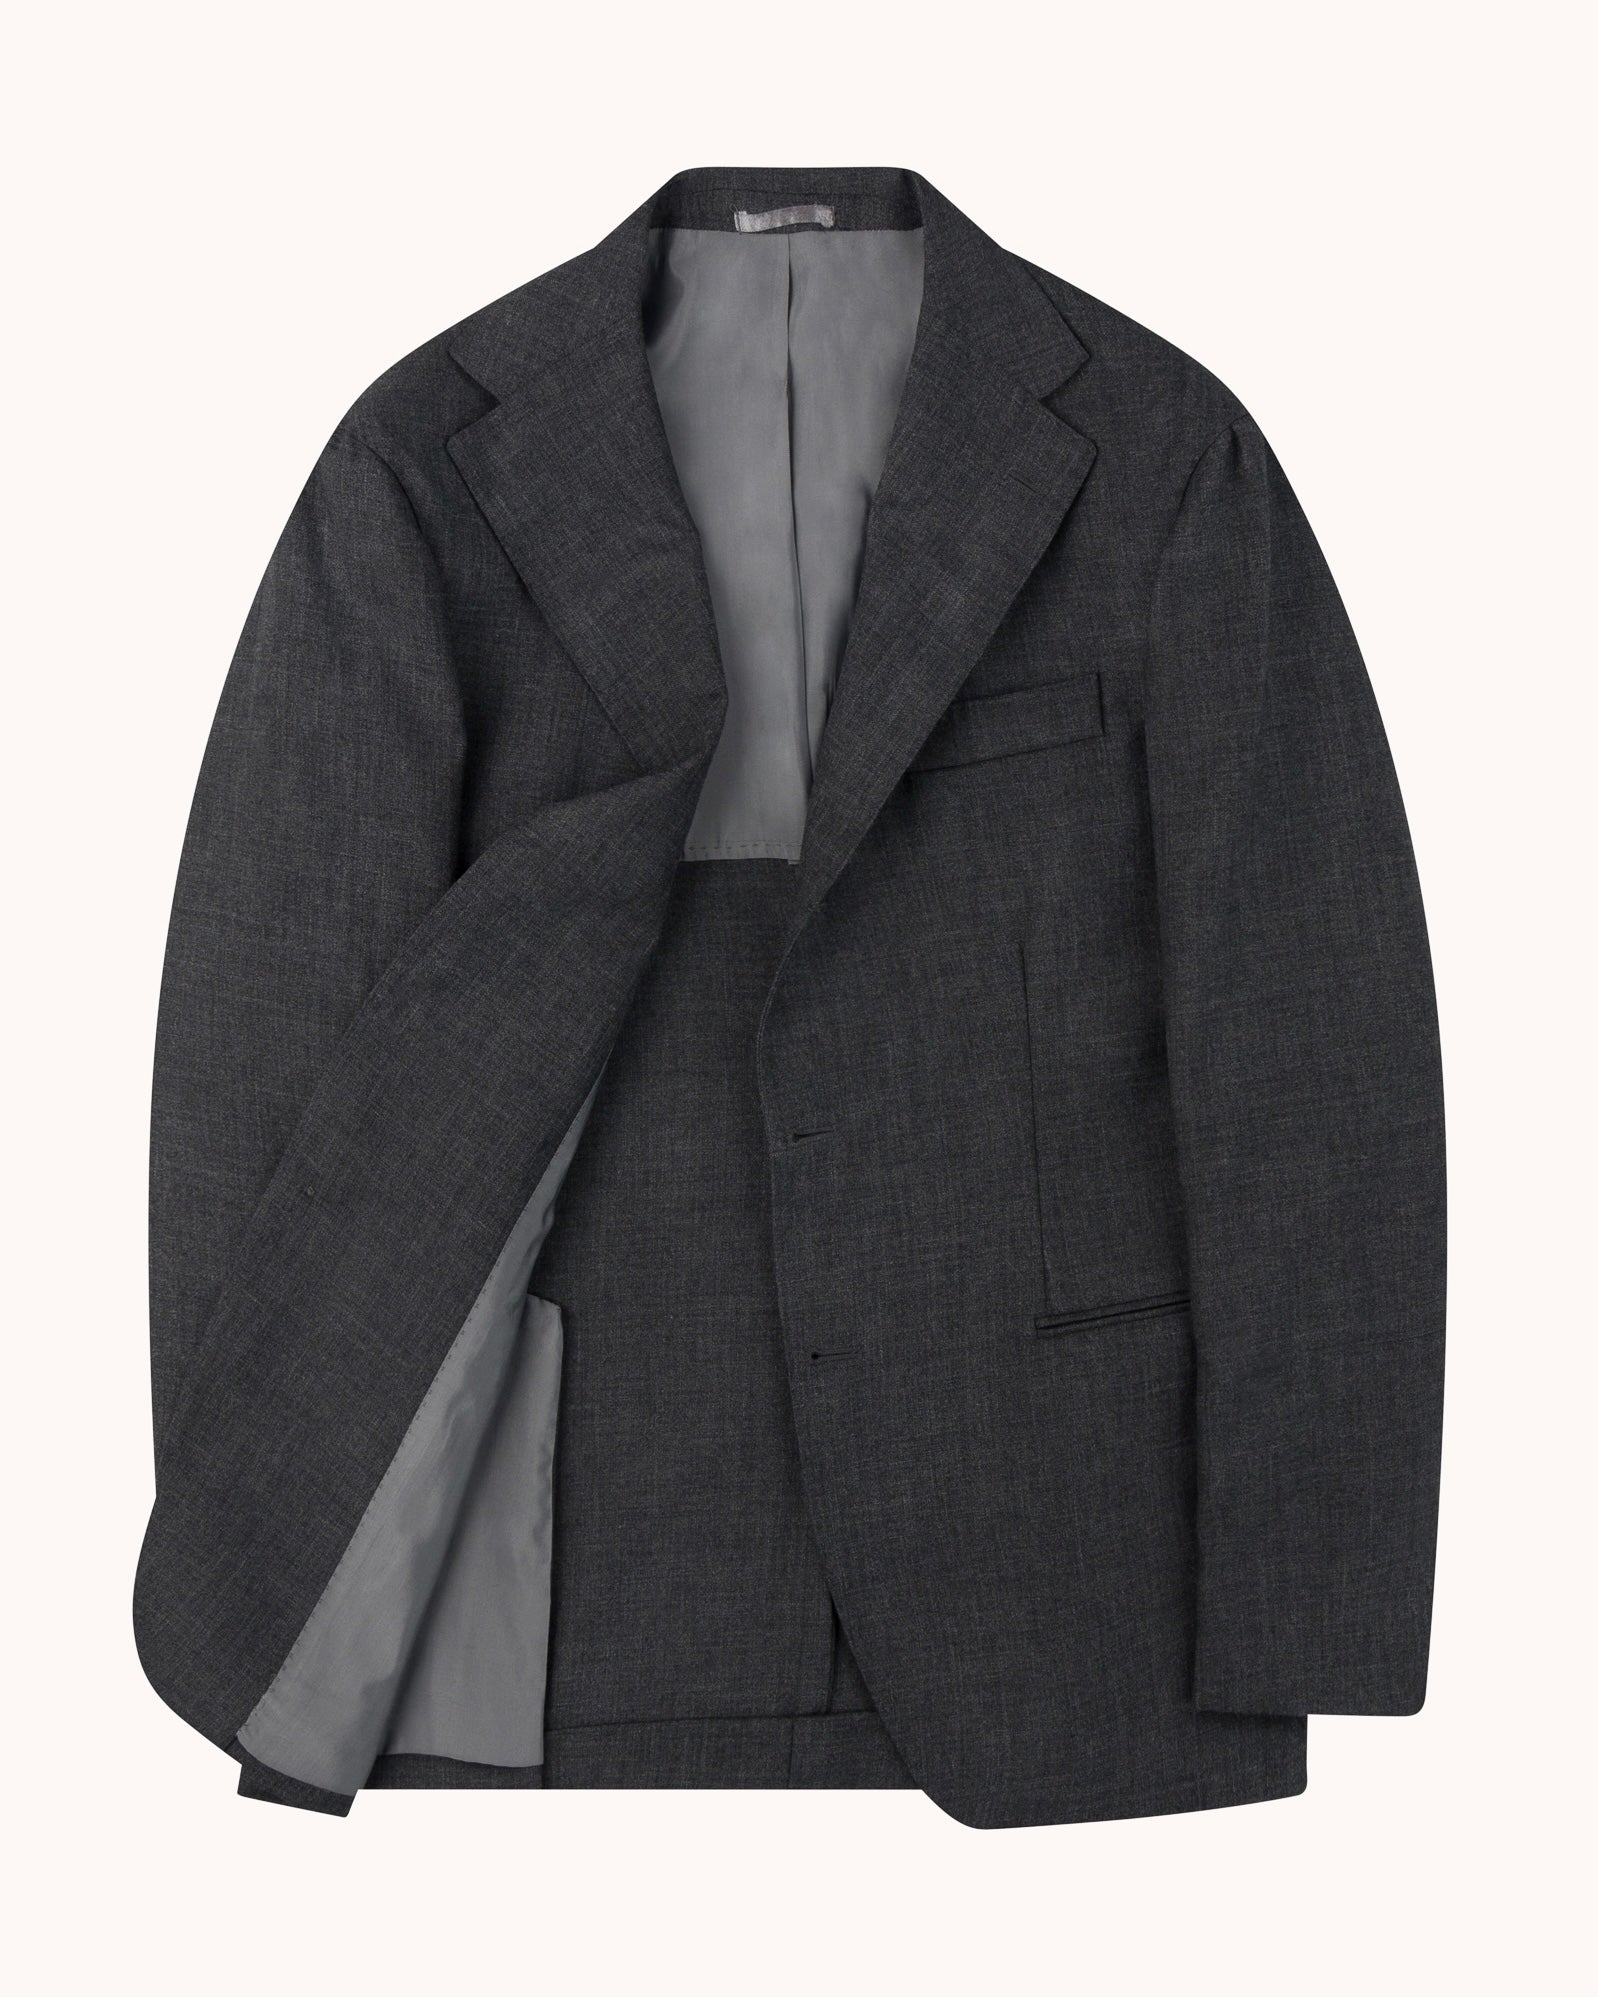 Sport Jacket - Charcoal Tropical Wool